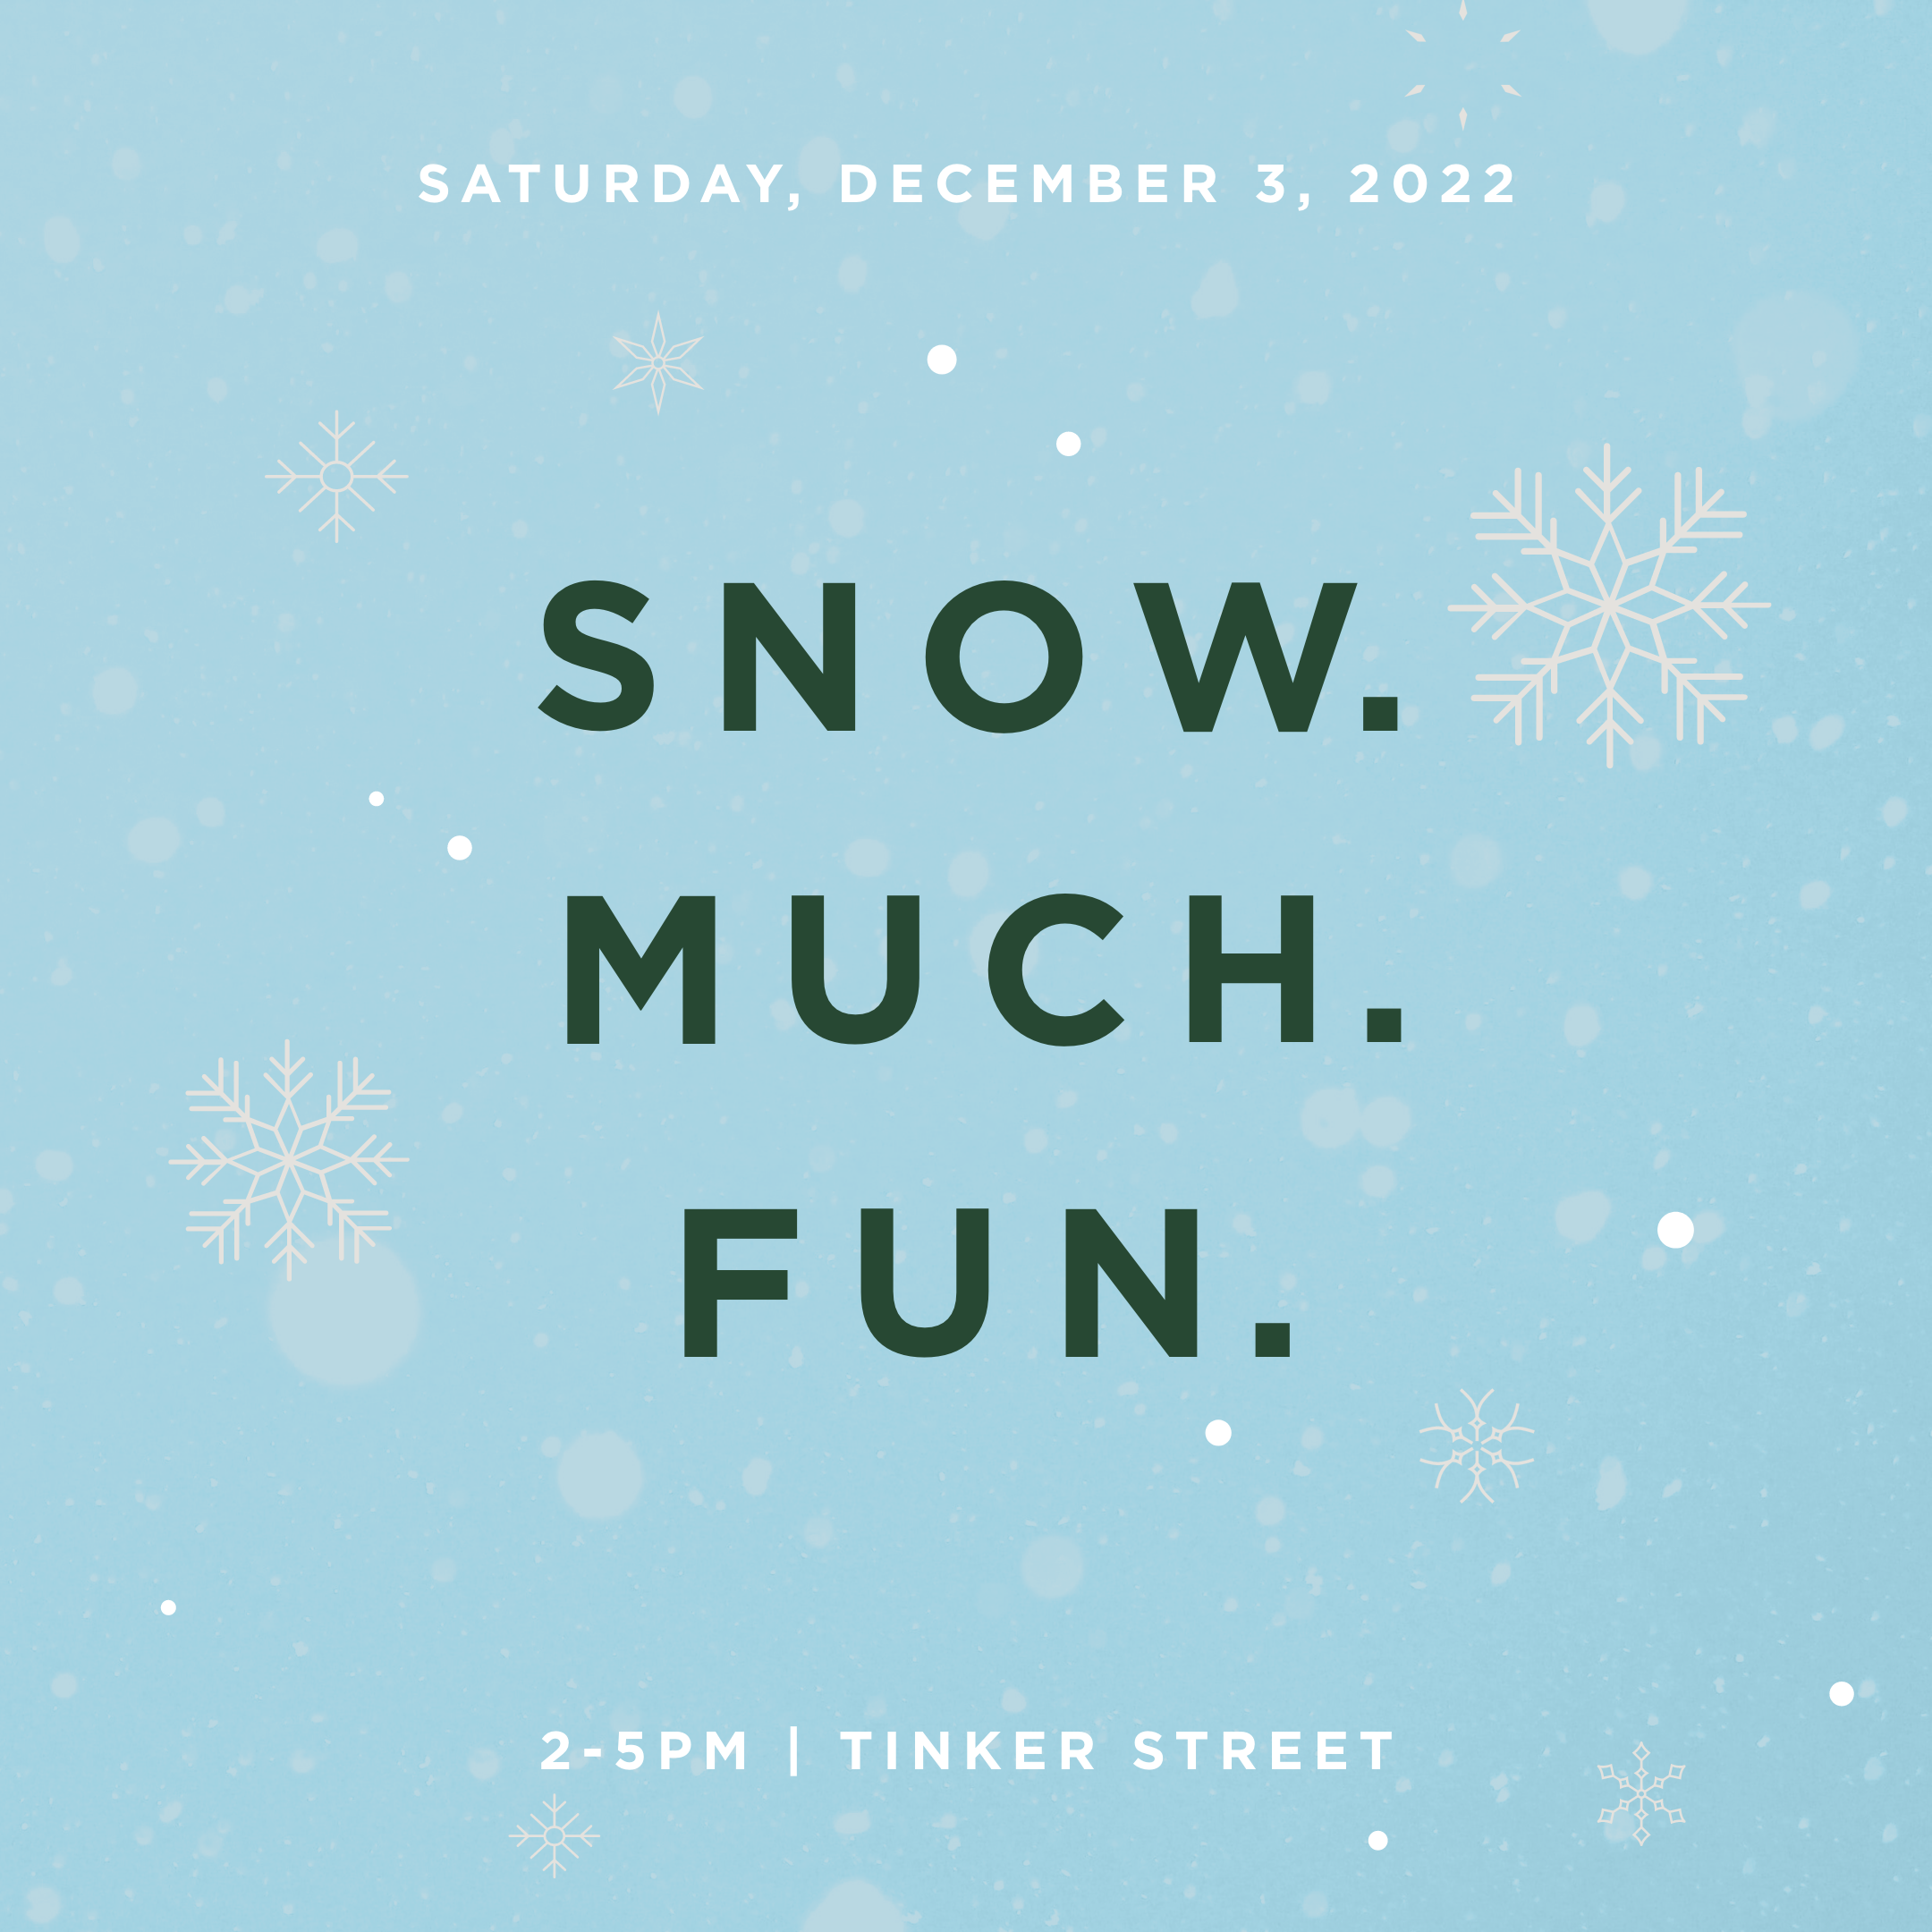 Snow much fun - tinker street.